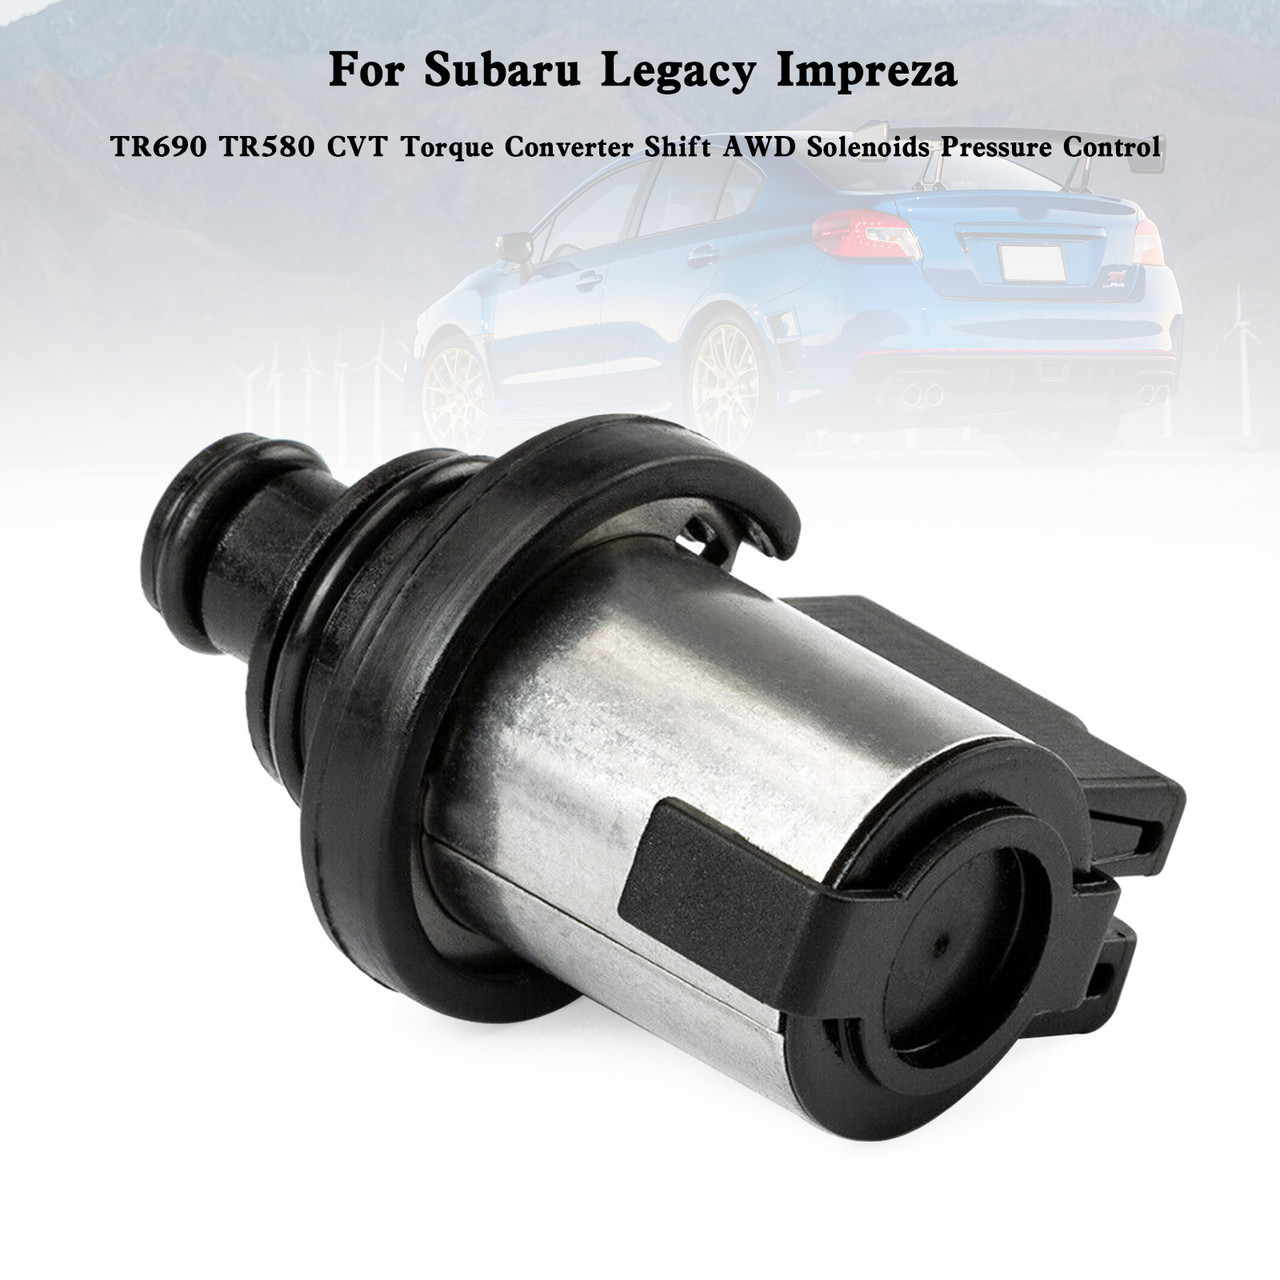 TR580 CVT Torque Converter Shift AWD Solenoids Pressure Control For Subaru Legacy Impreza